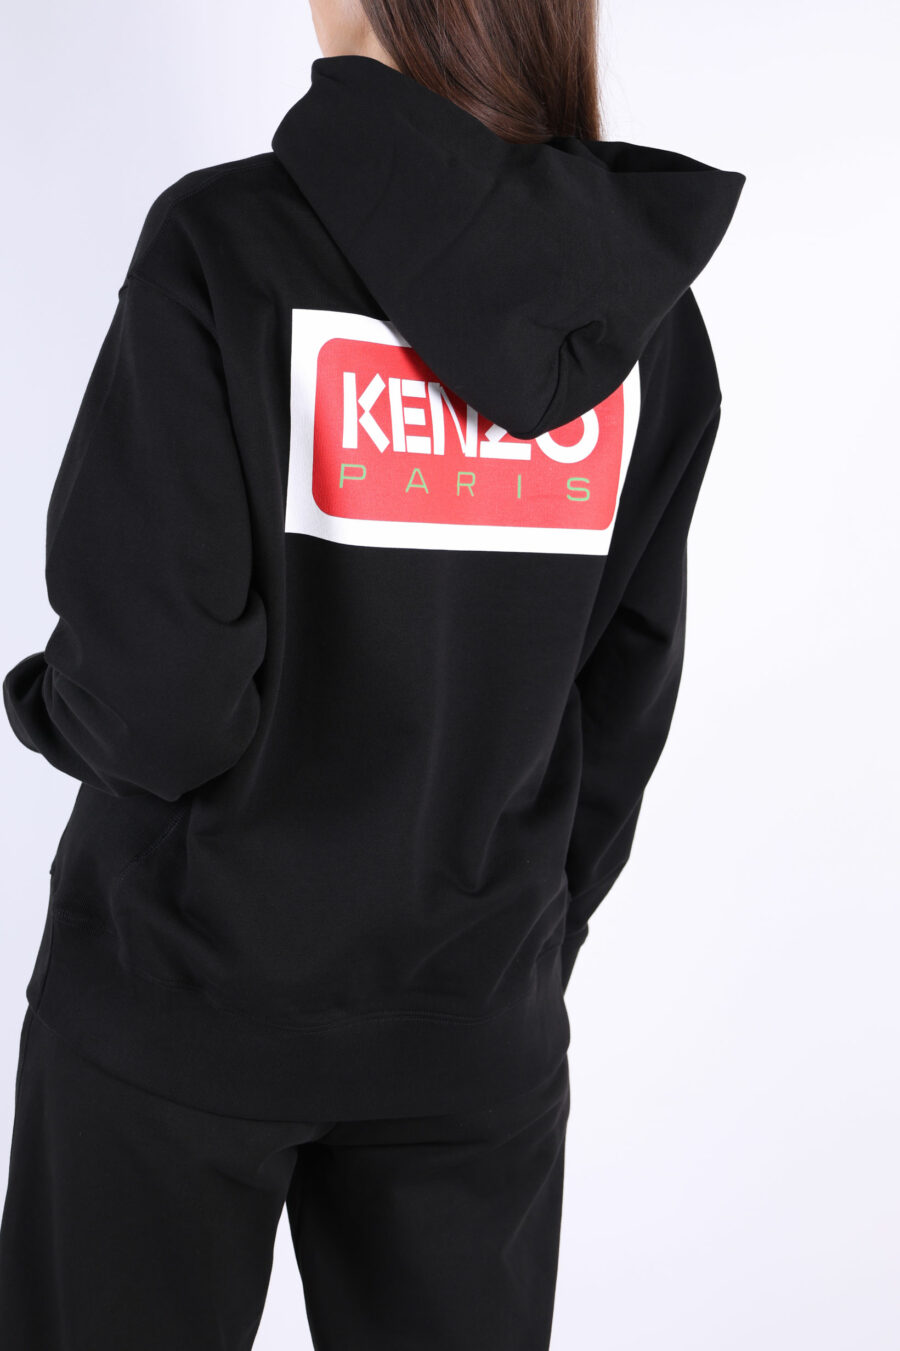 Oversize black hooded sweatshirt with "kenzo paris" logo - 361223051567301581